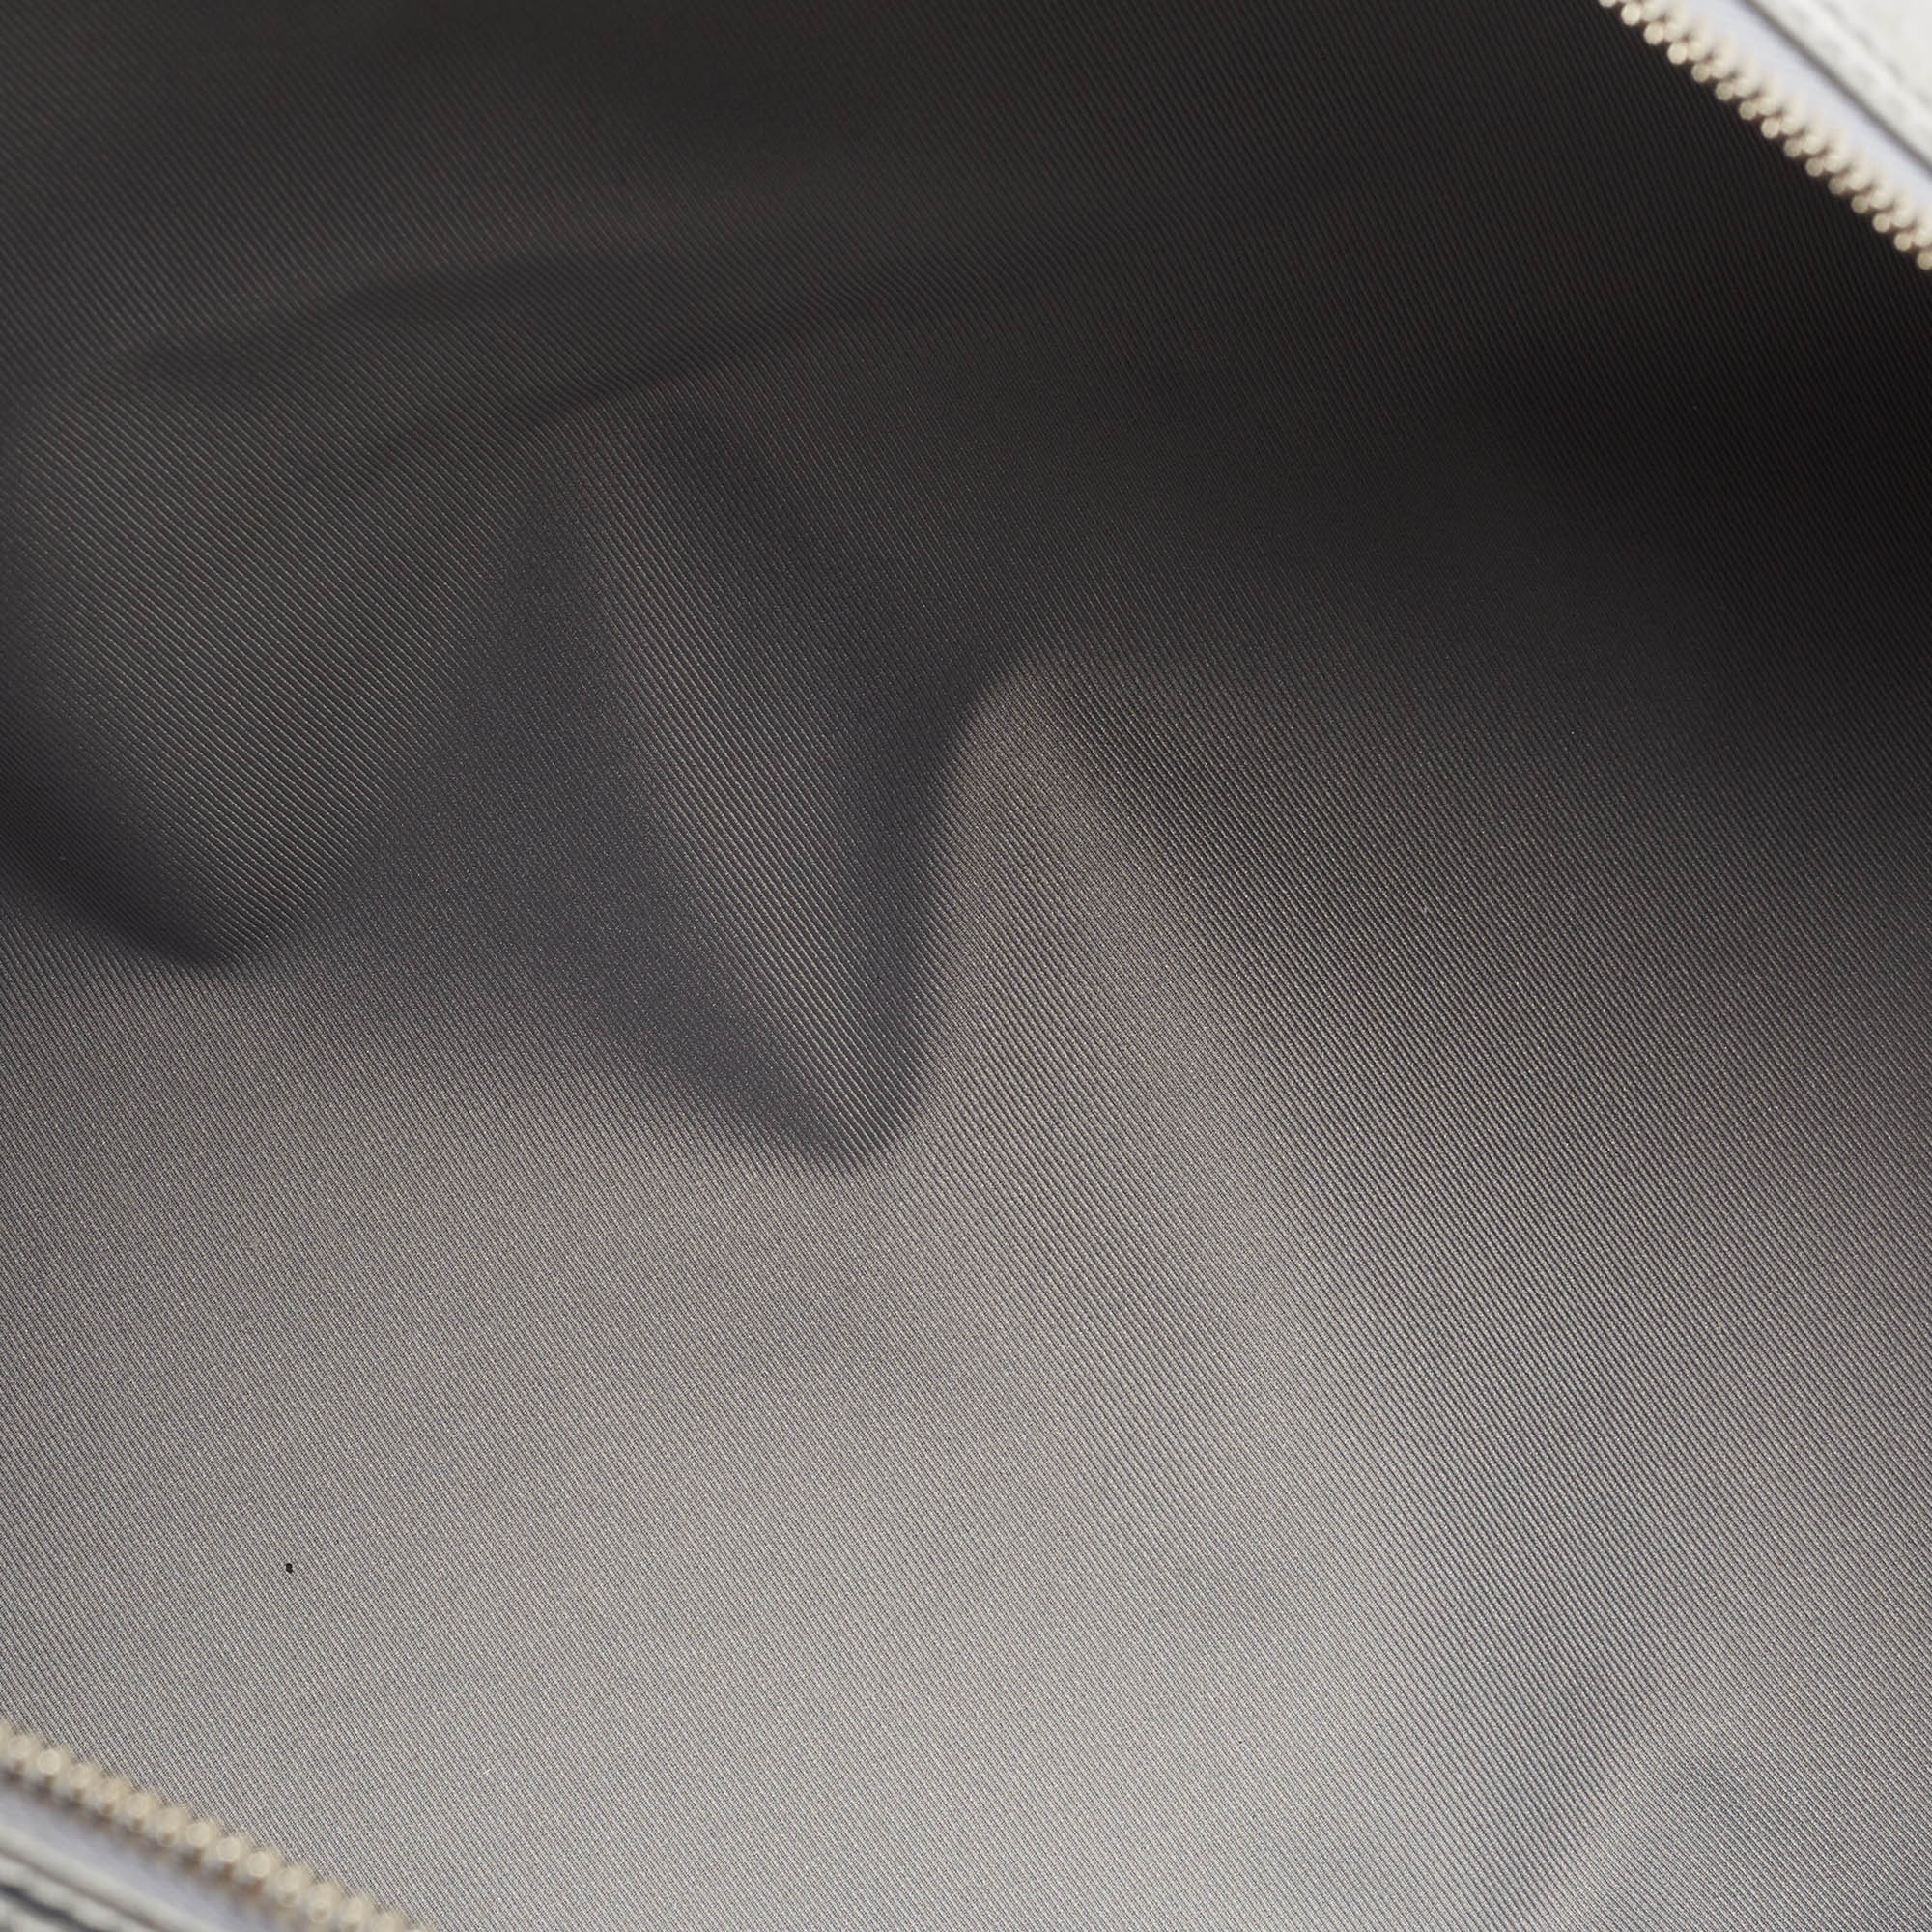 Louis Vuitton Silver Monogram Miroir Keepall Bandouliere 50 Bag